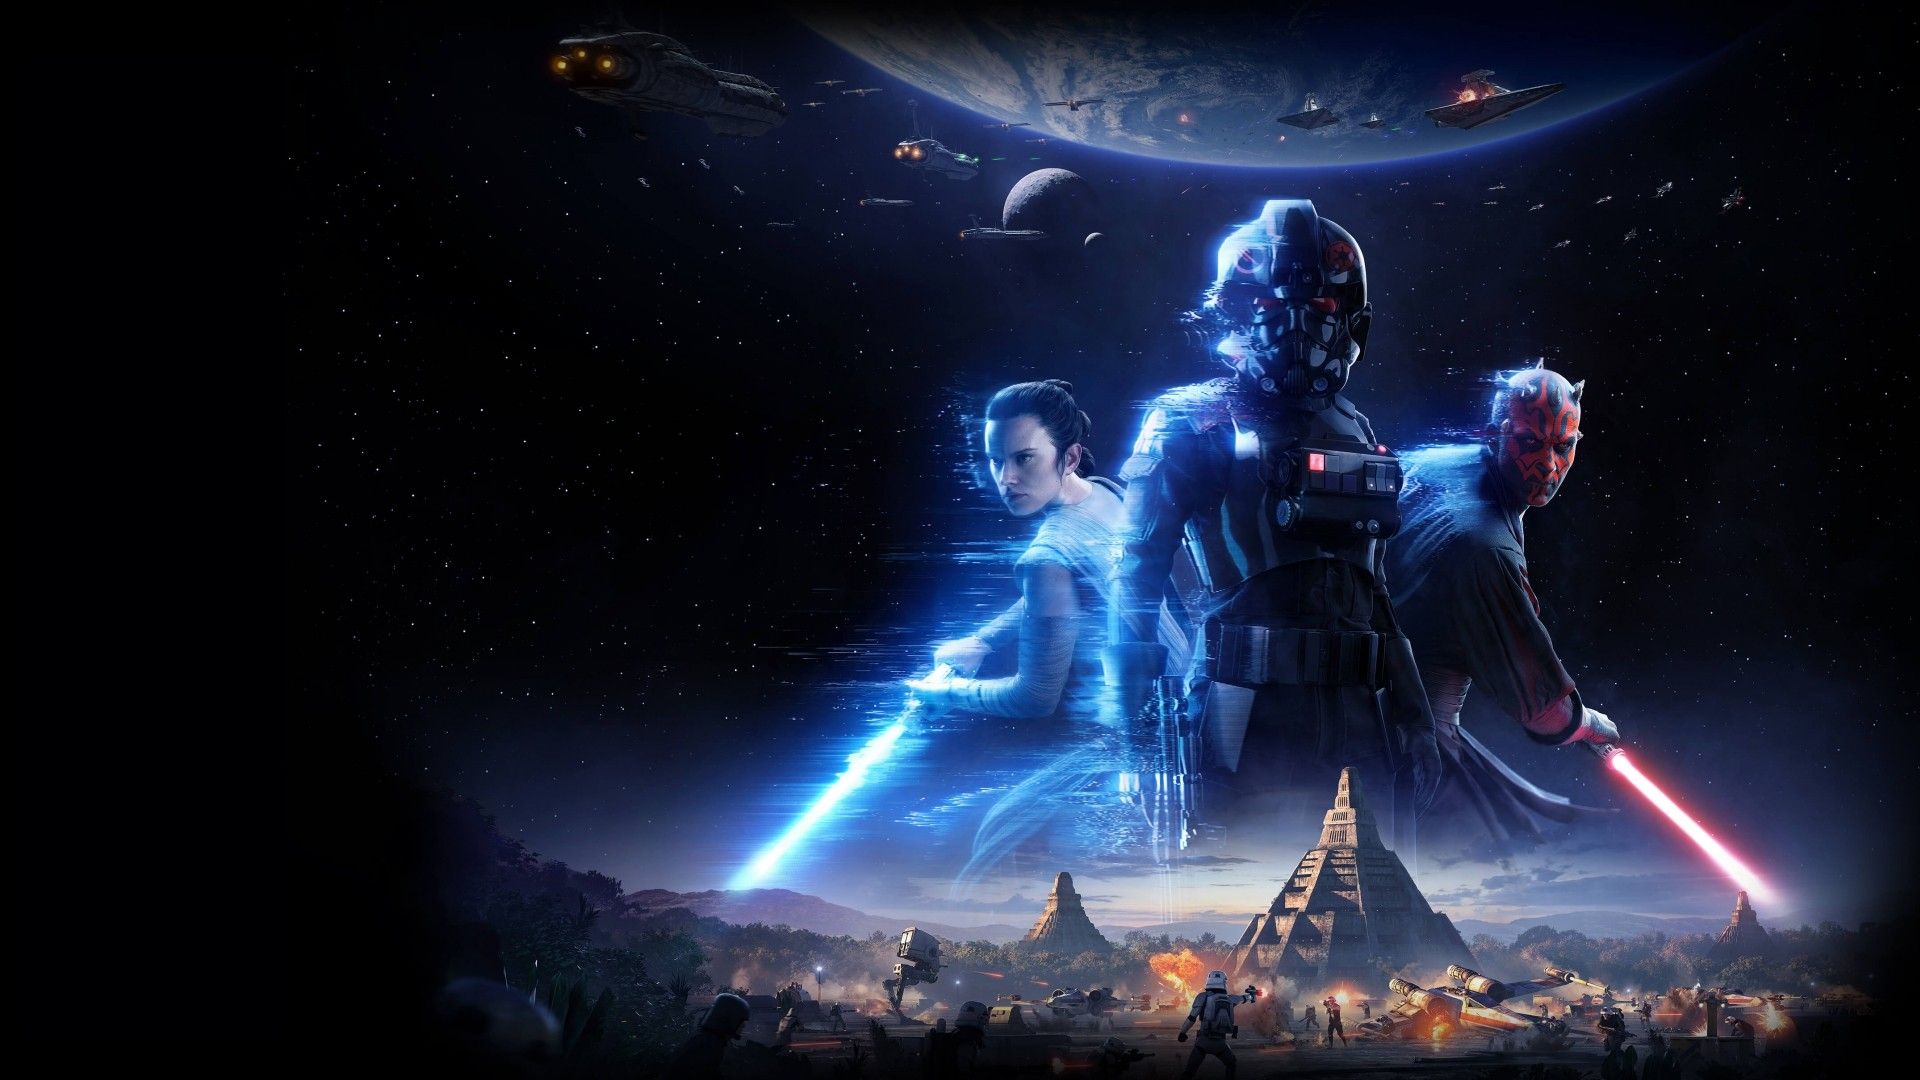 Star Wars Battlefront 2 HD Wallpaper Theme. Star wars awesome, Star wars battlefront, Star wars games